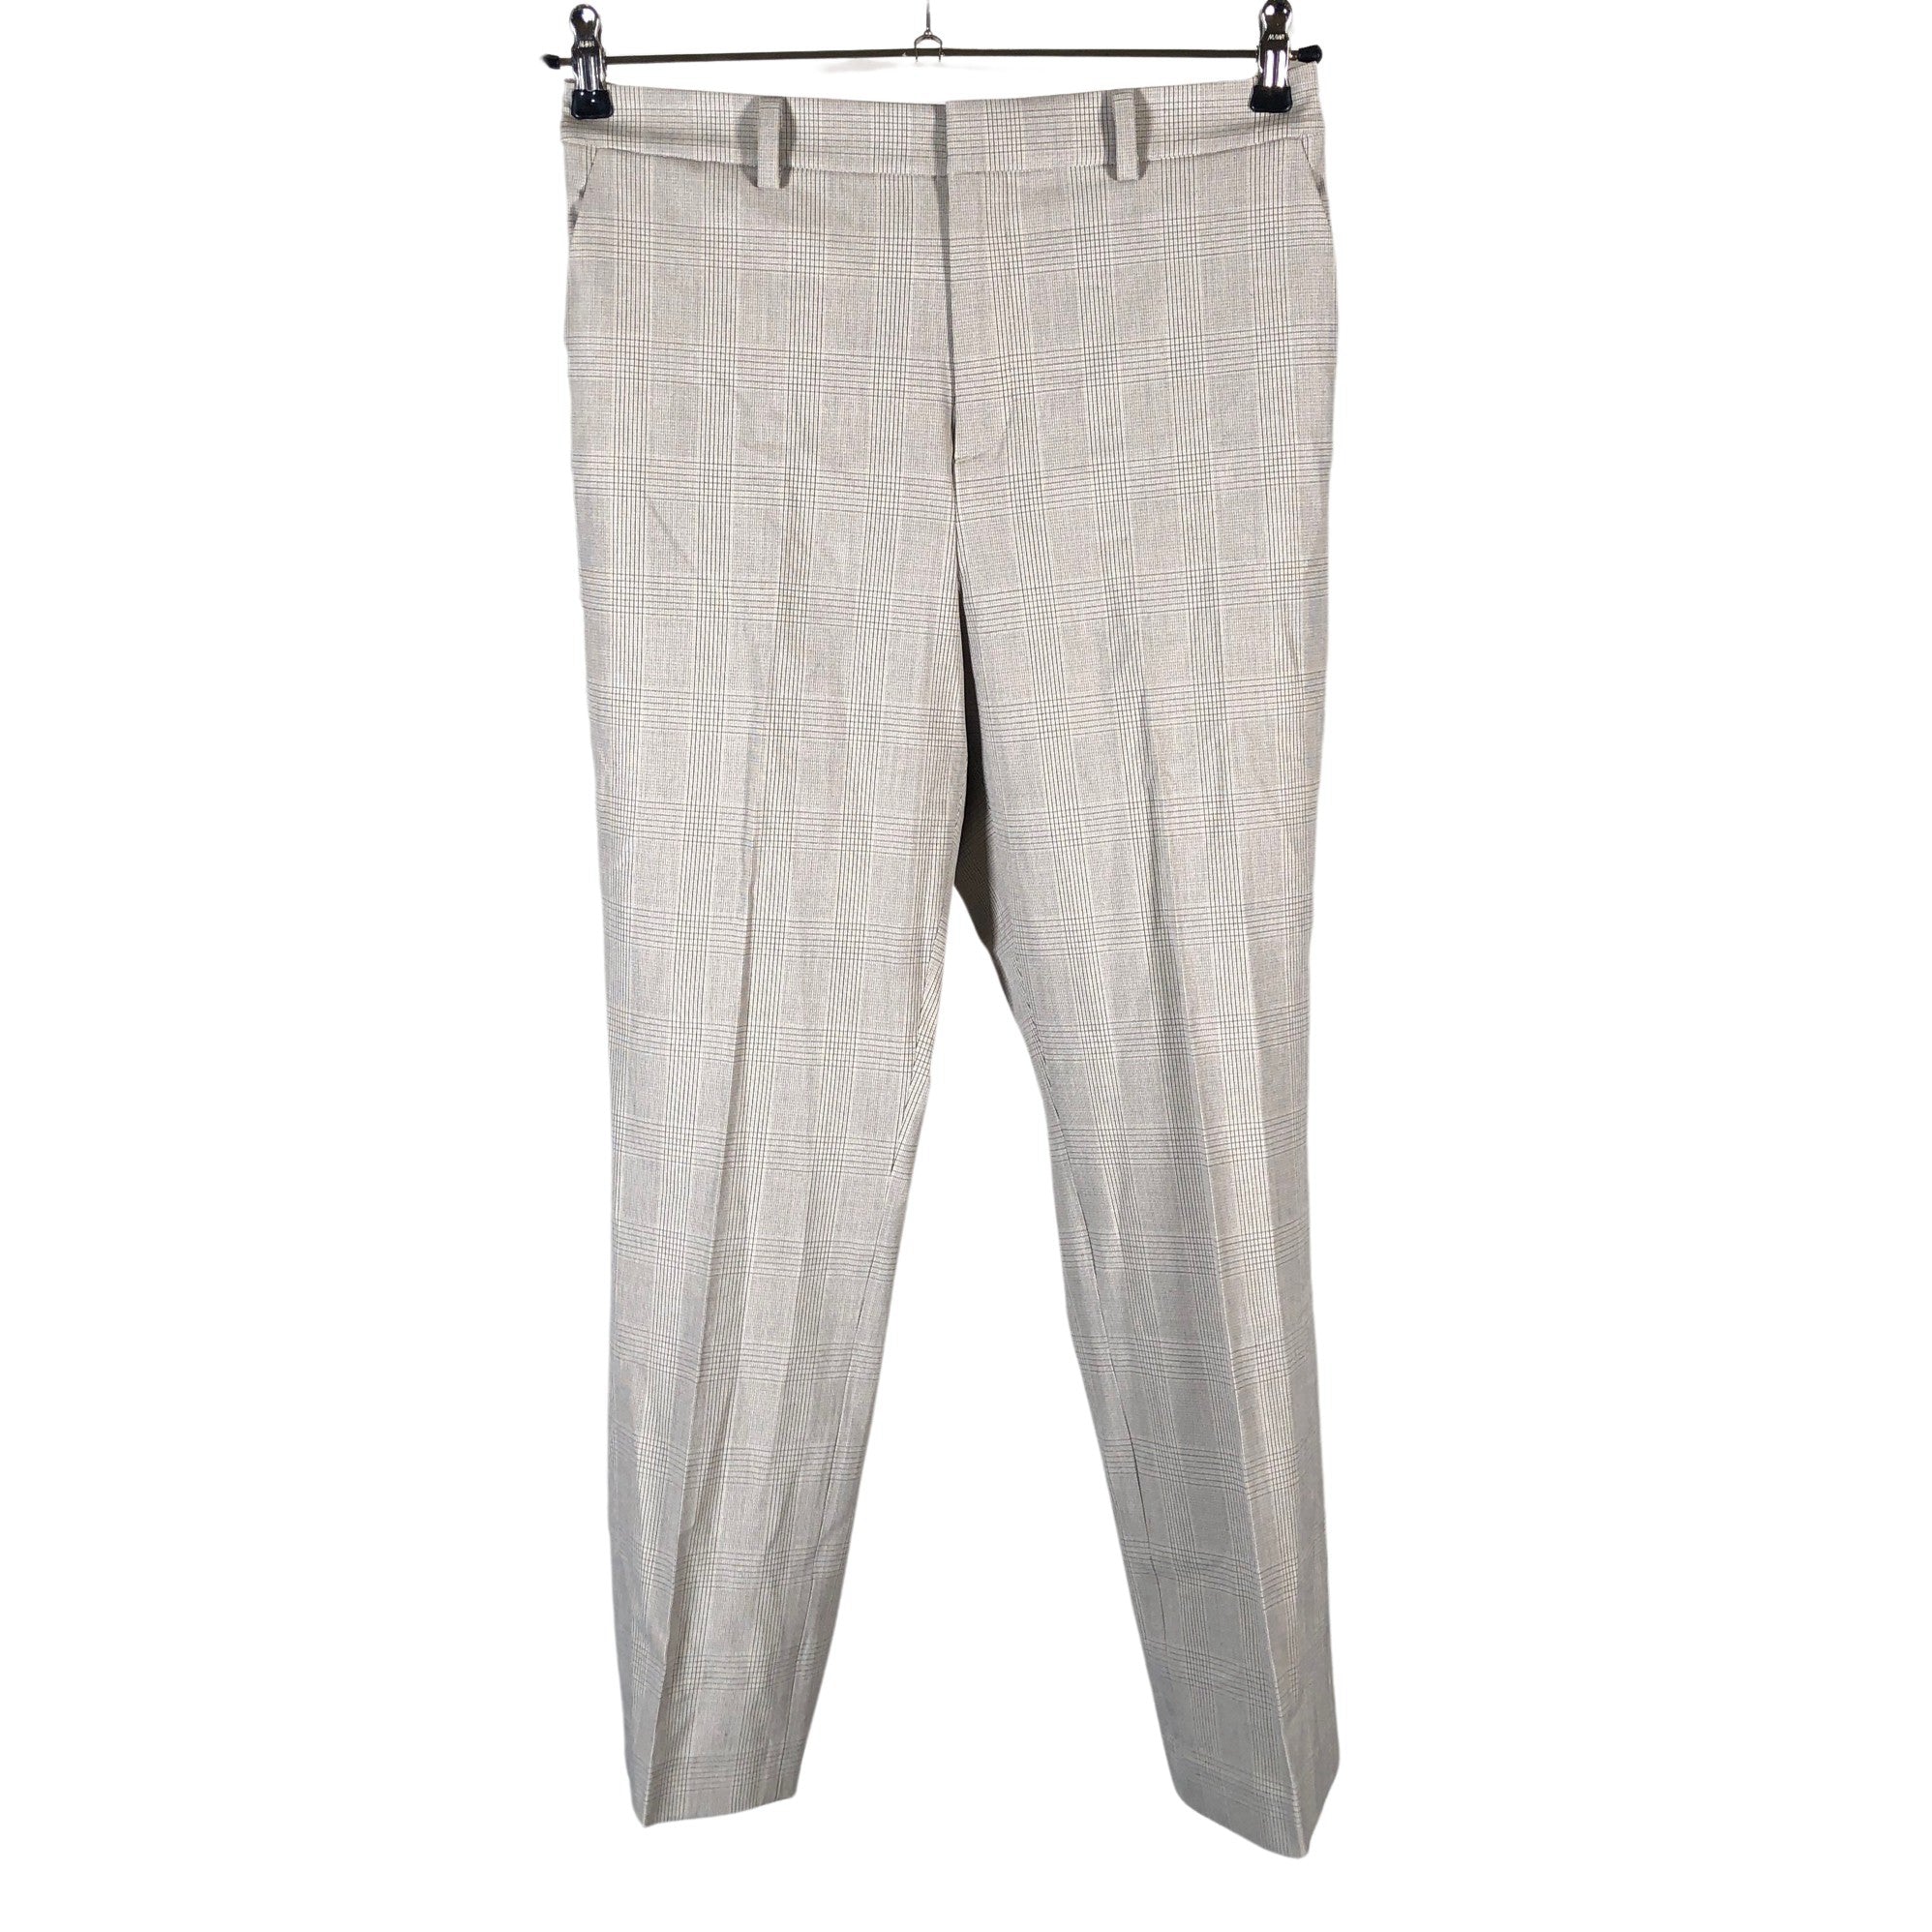 Amazon.co.jp: FLOYINM Men's Casual Denim Pants Black Men Skinny Jeans  Elastic Slim Trousers Jean Plus Size (Color: Black grey, Size: 38 code) :  Clothing, Shoes & Jewelry